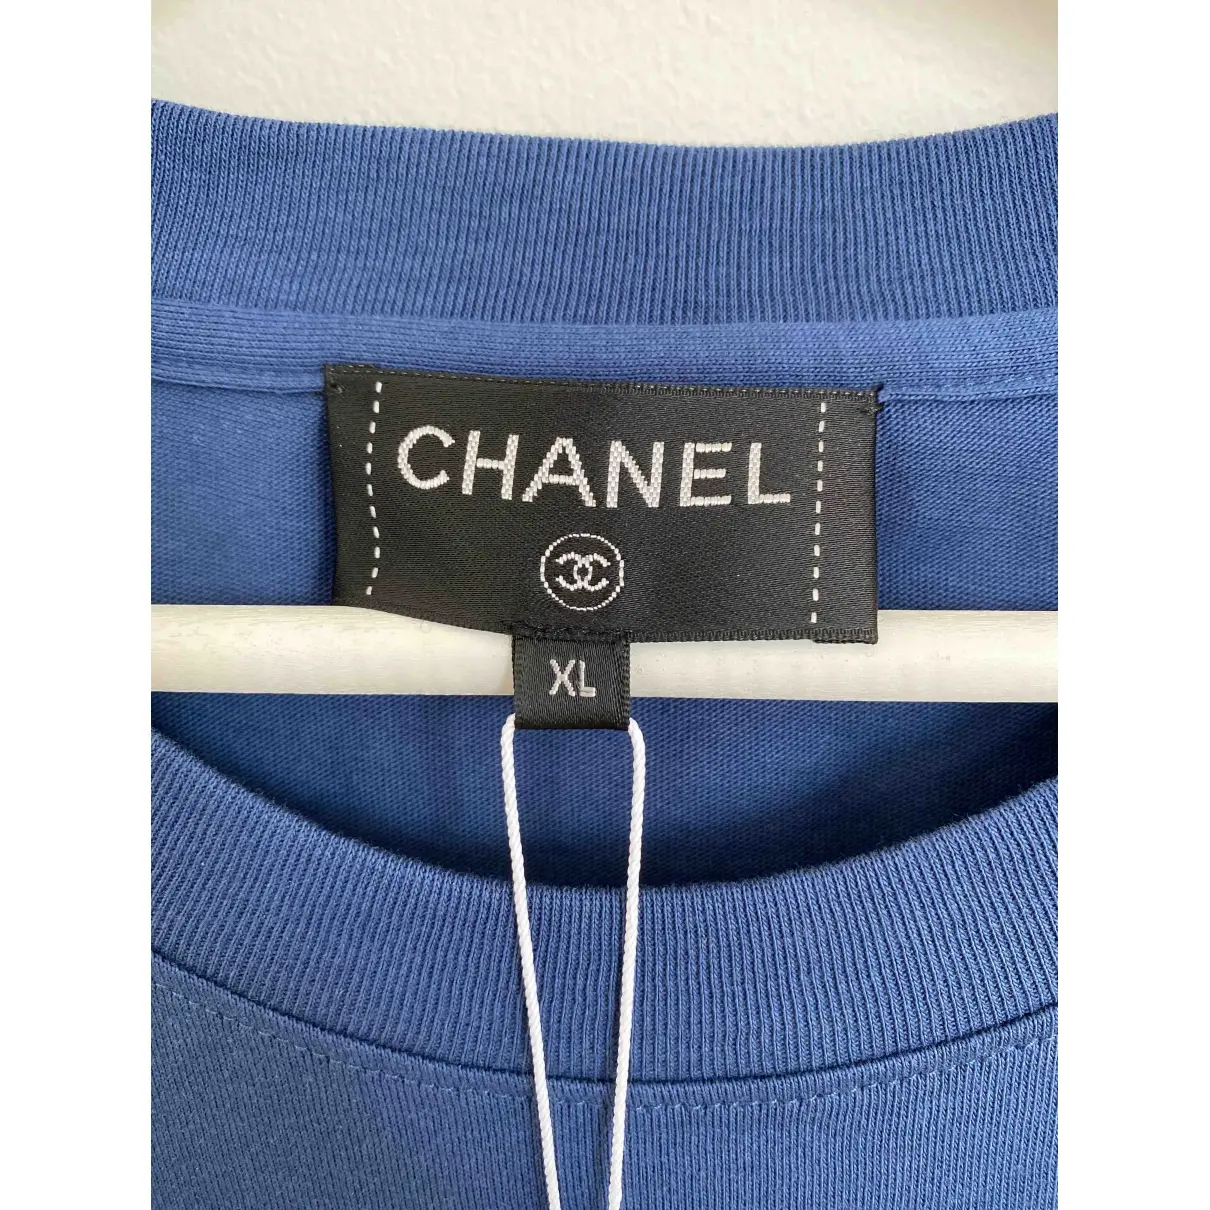 Buy Chanel x Pharrell Williams Blue Cotton T-shirt online